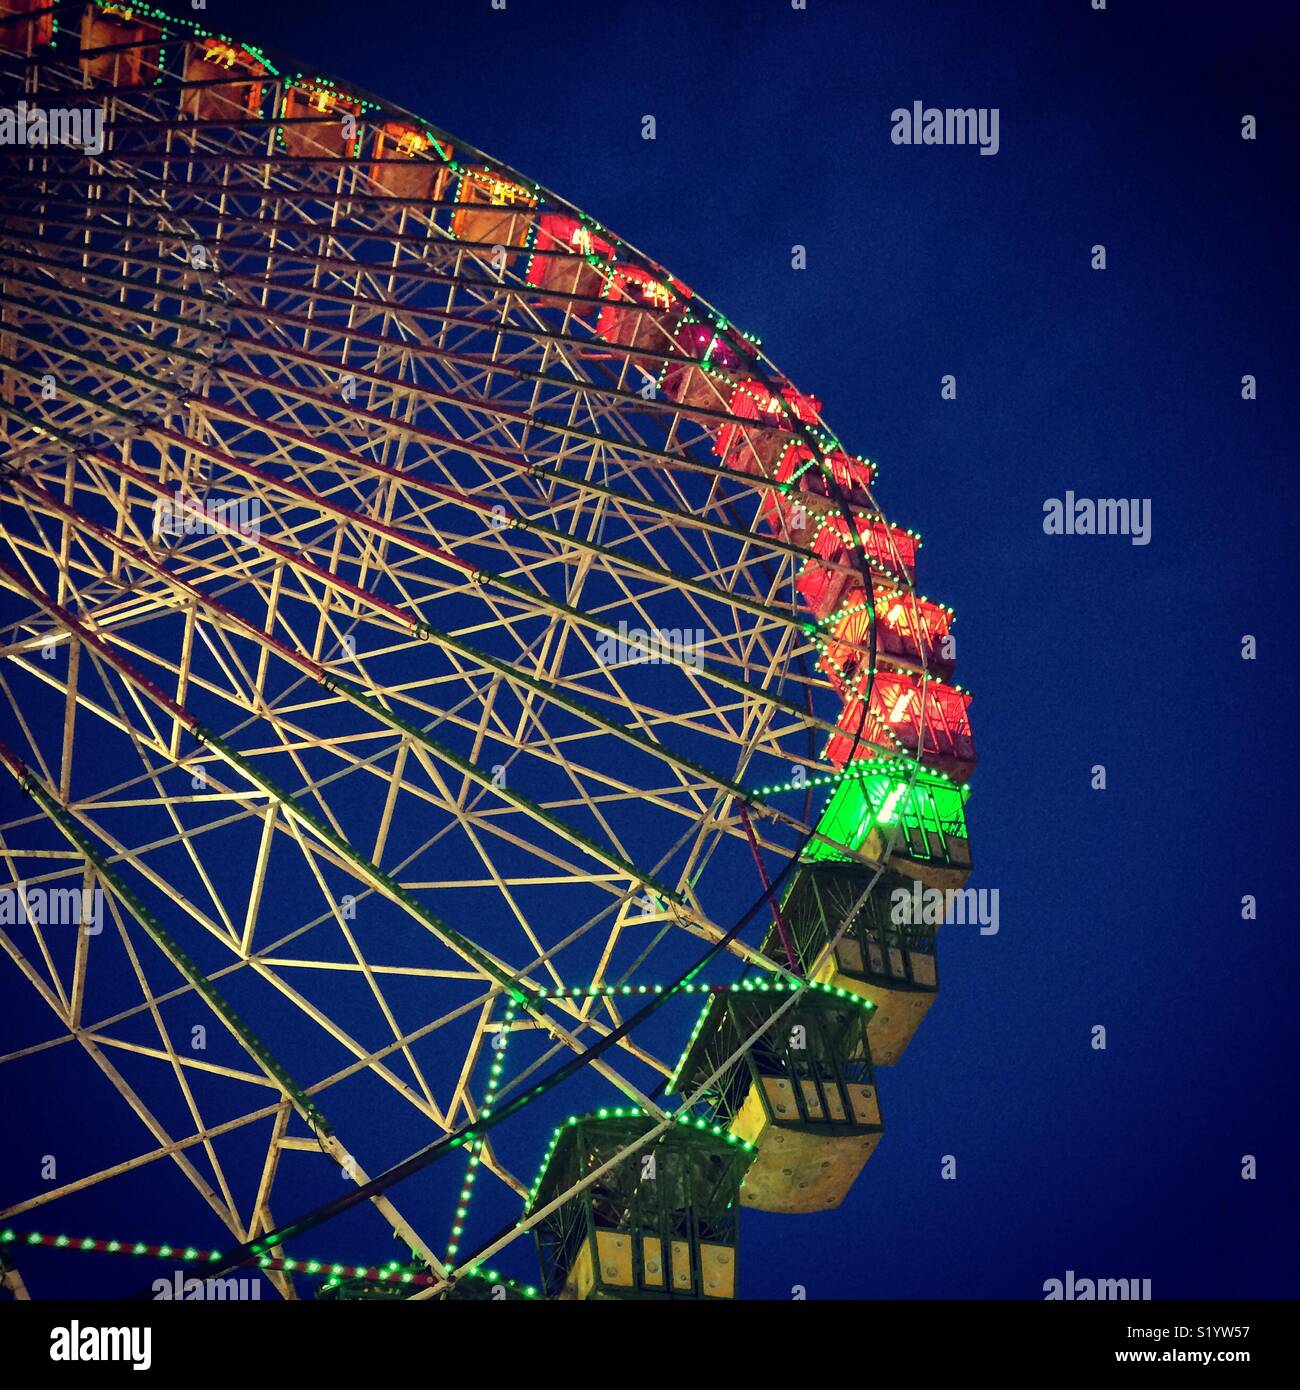 Ferris wheel at night Stock Photo